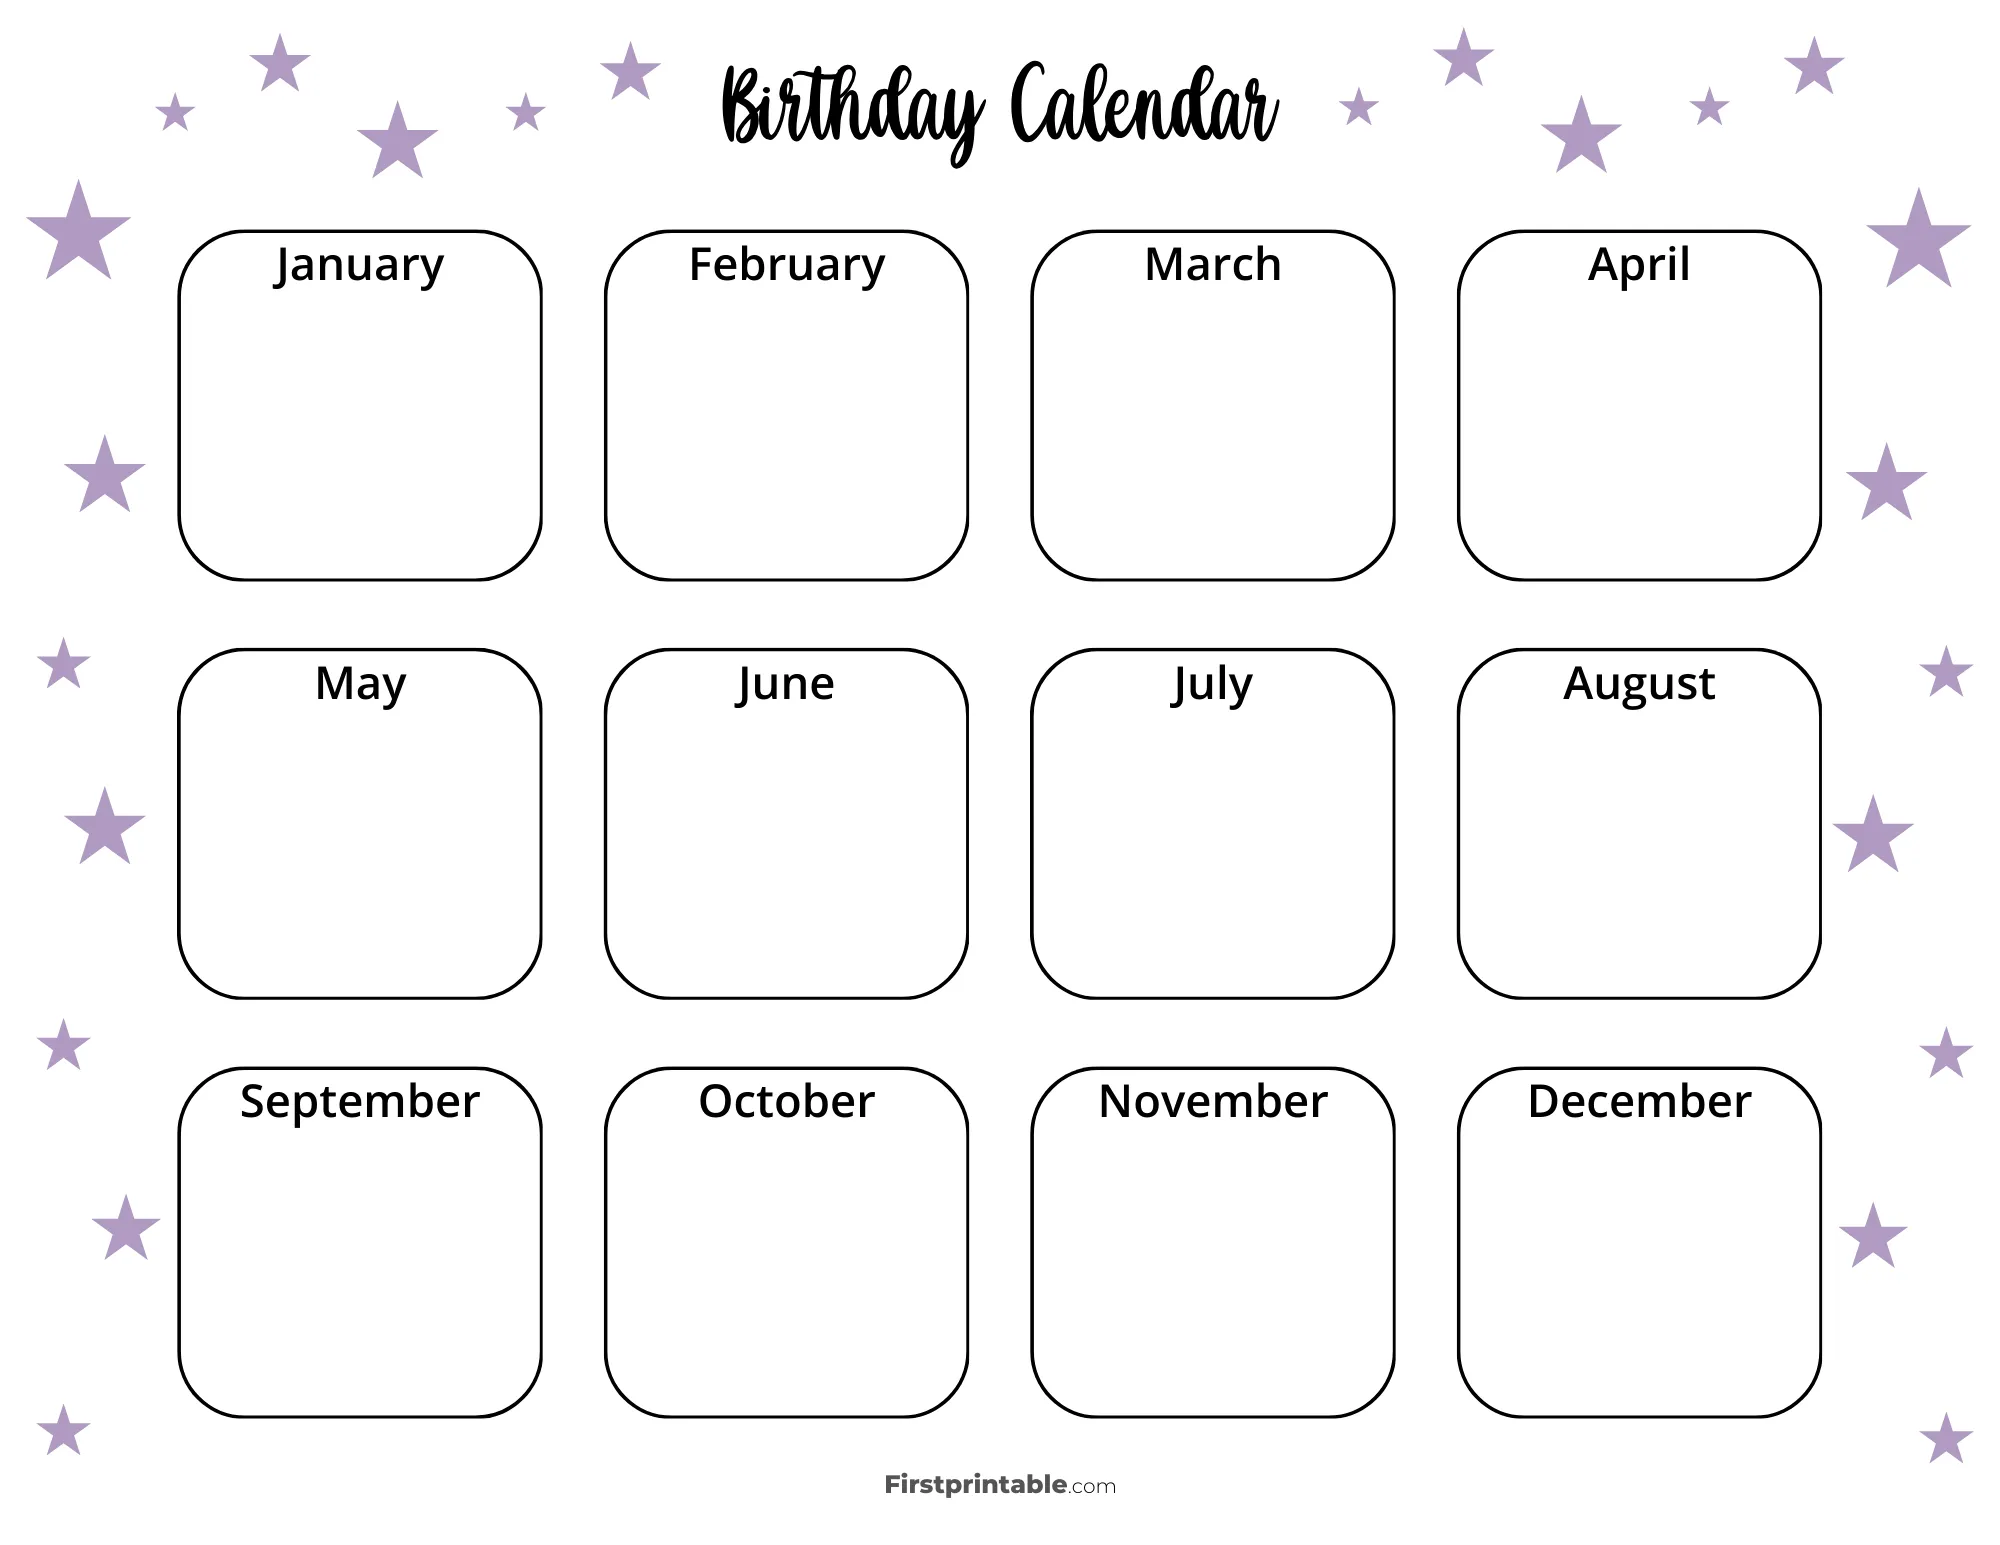 Birthday Calendar Printable Template 26